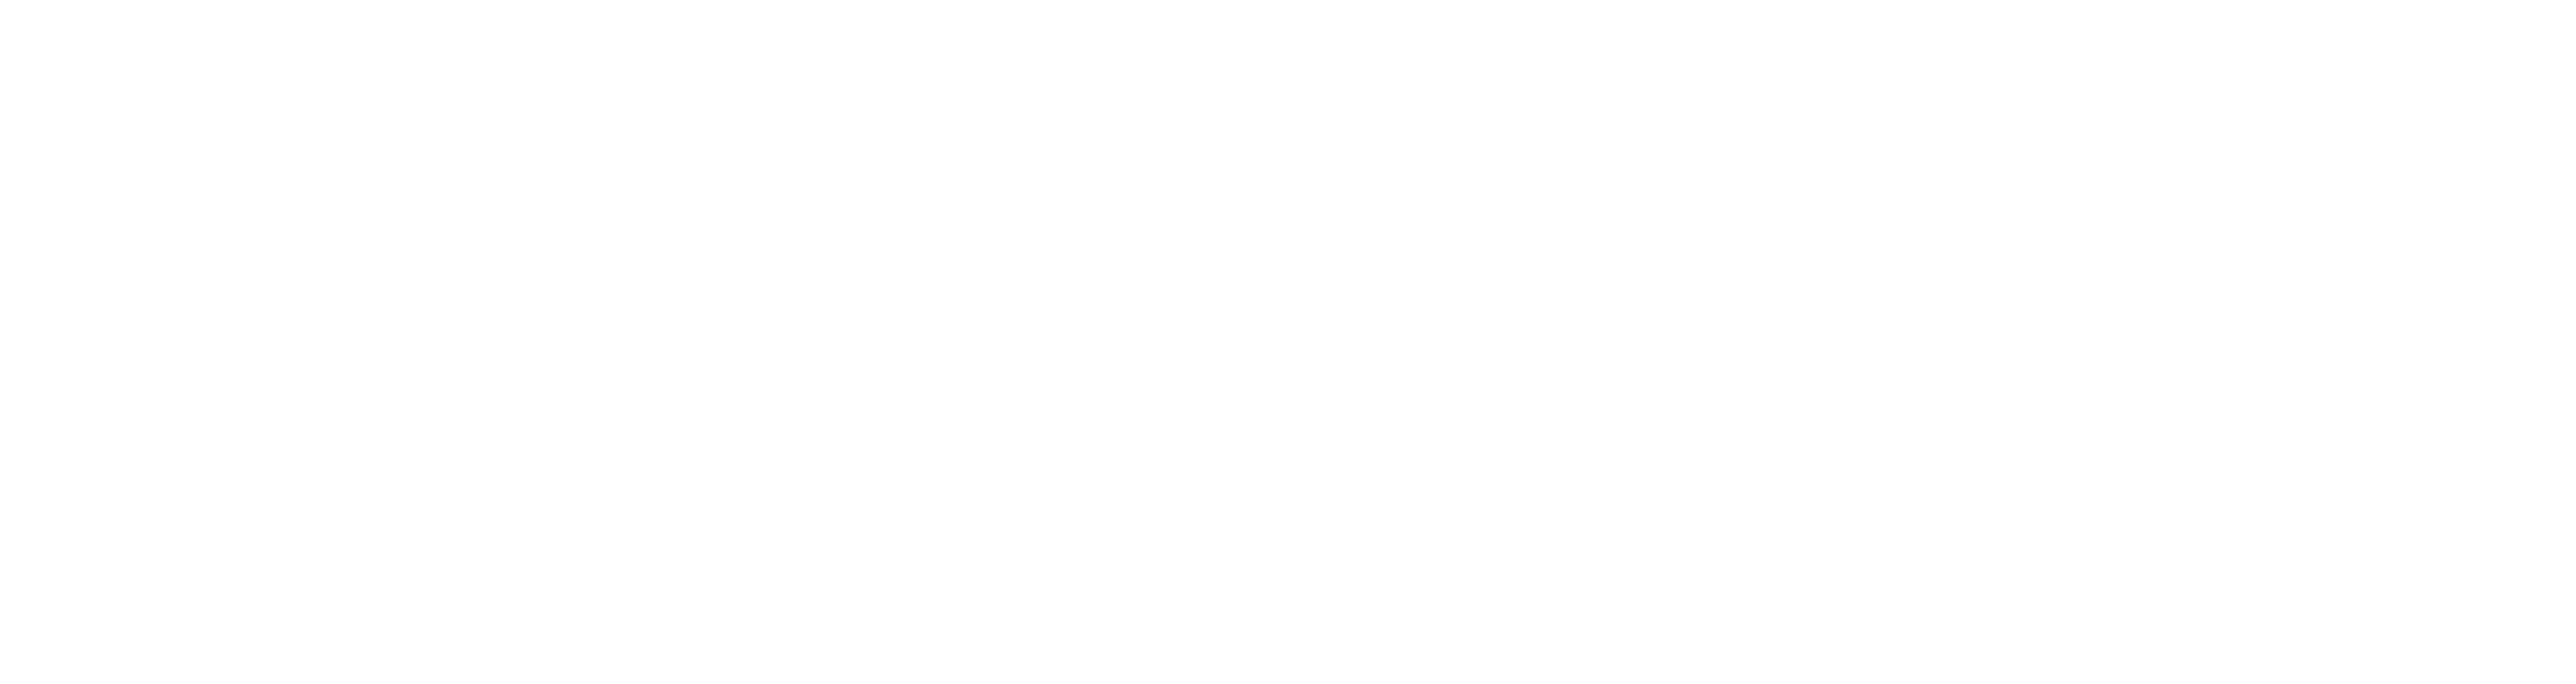 AniCura Mandal Dyreklinikk logo